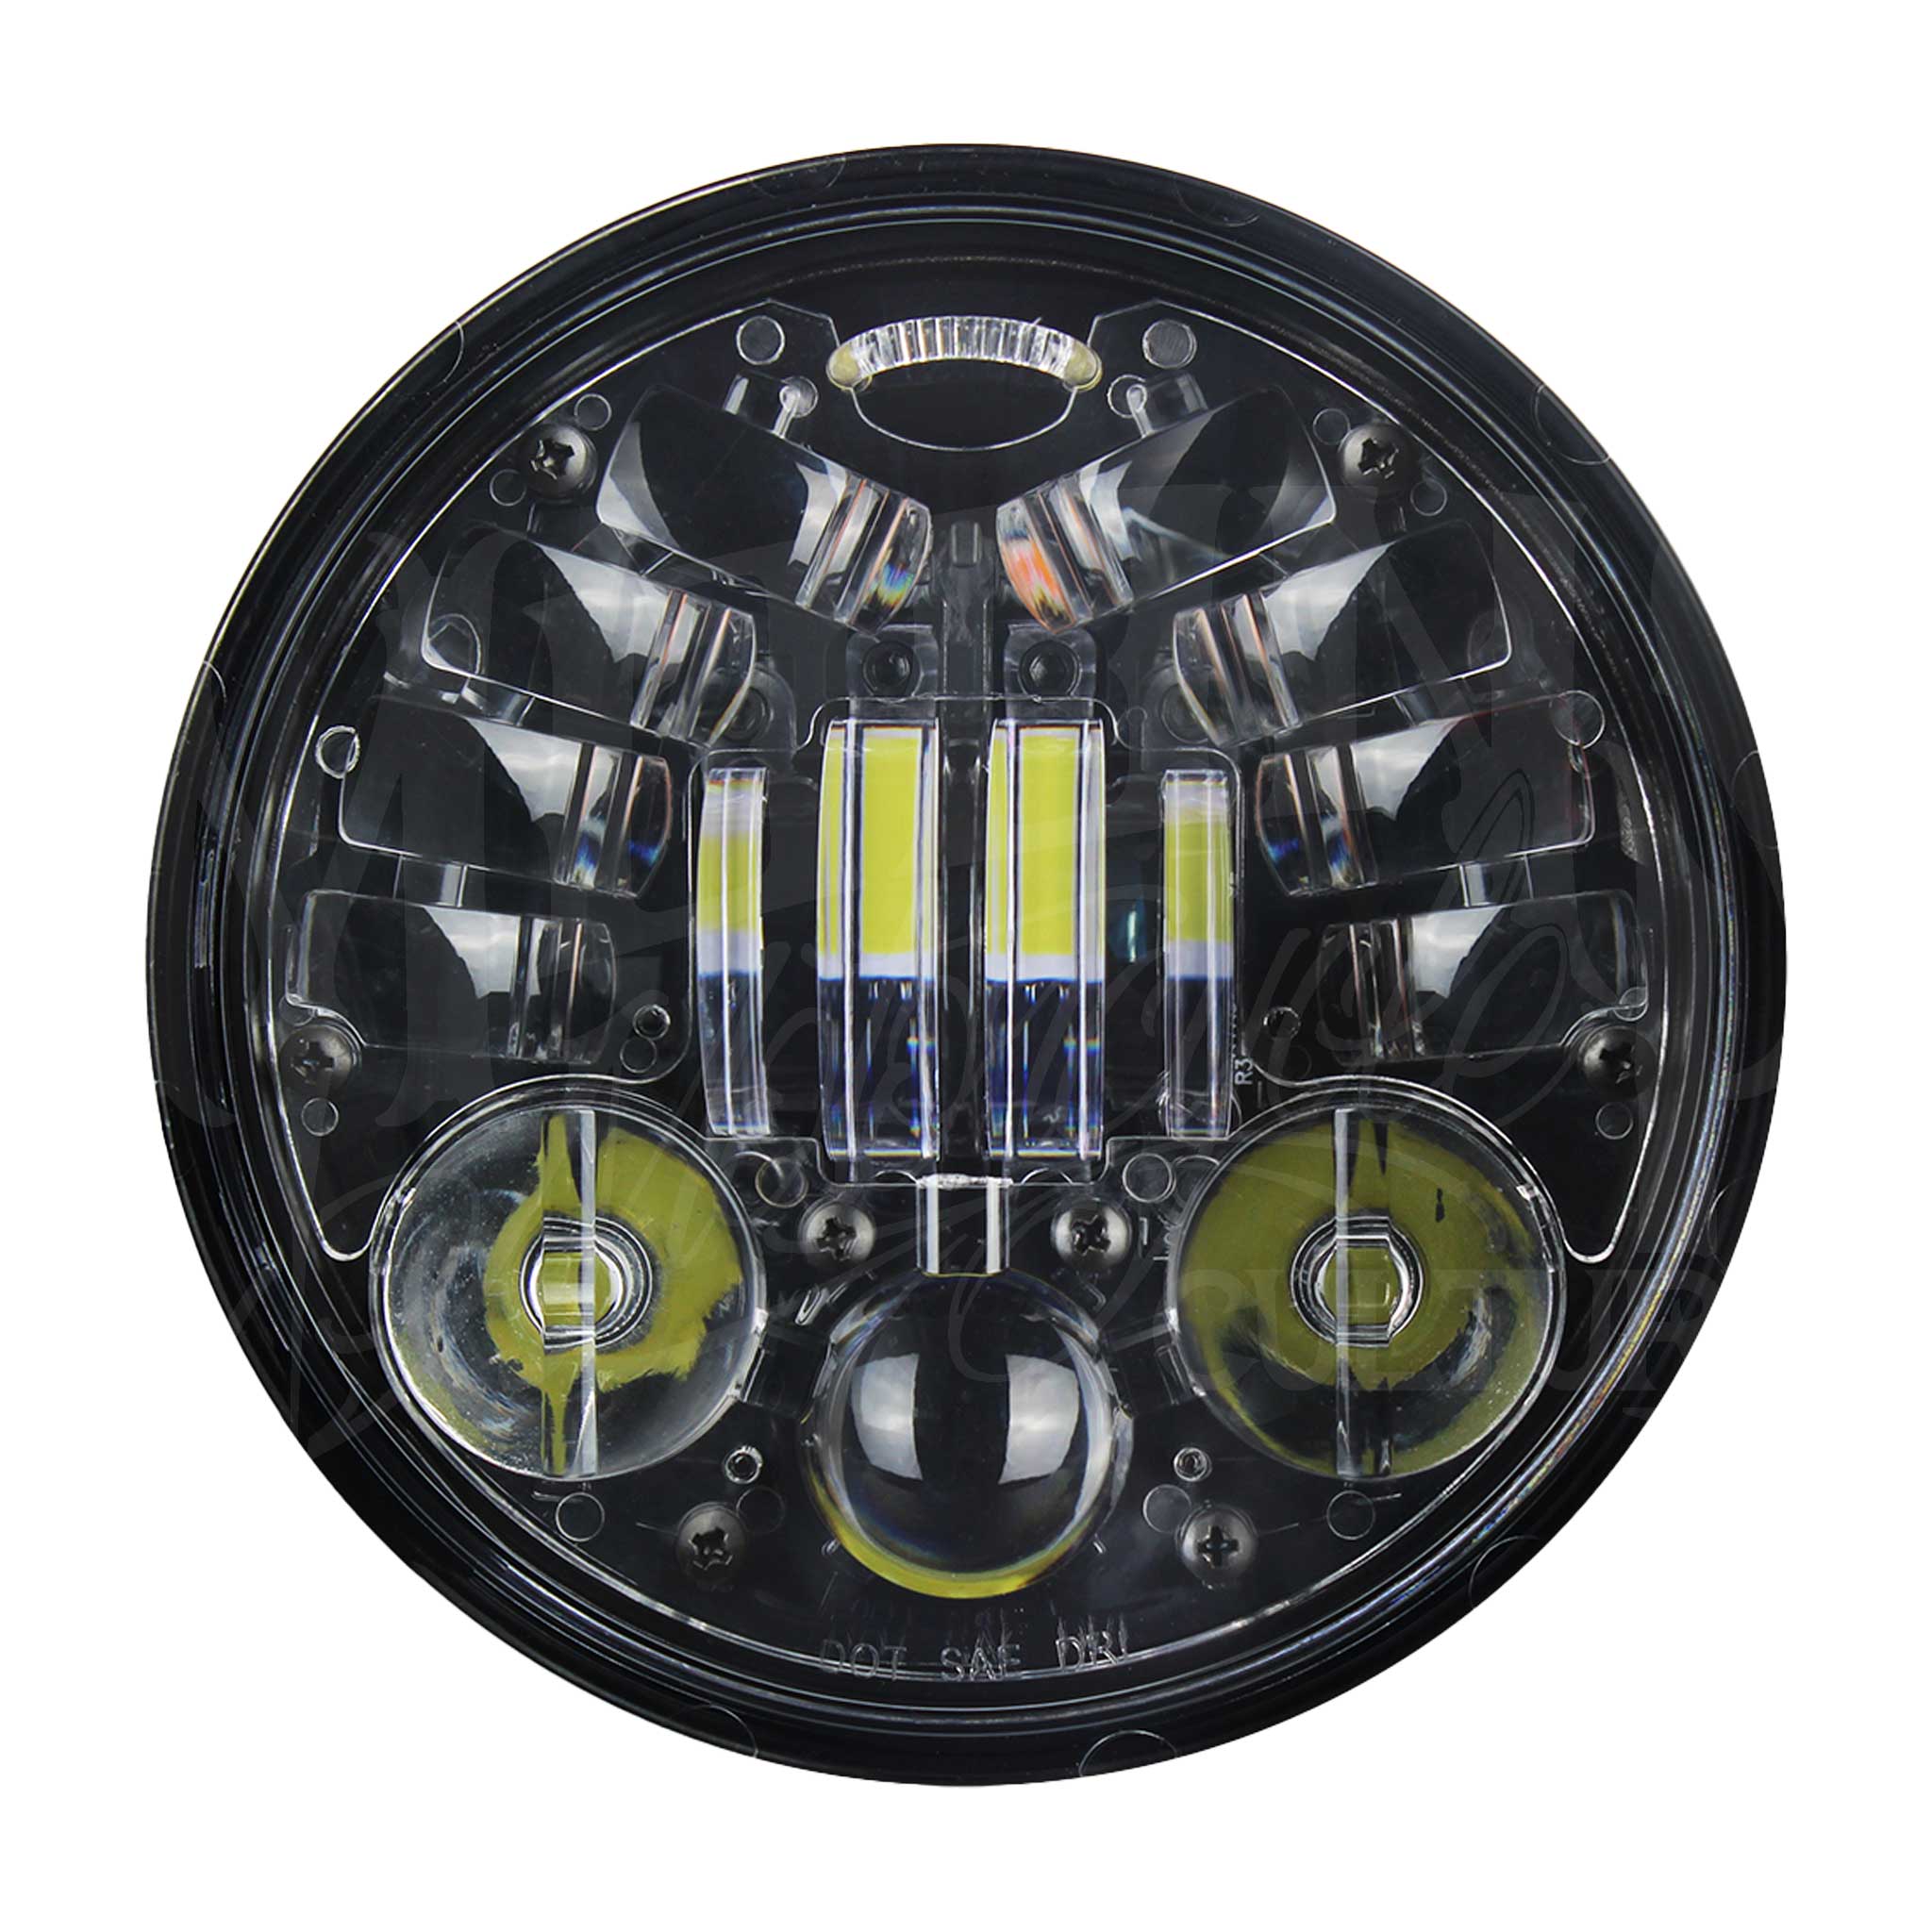 5.75 MOONSMC® Moonmaker LED Headlight For Harley – MOONSMC® Moons Motorcycle Culture